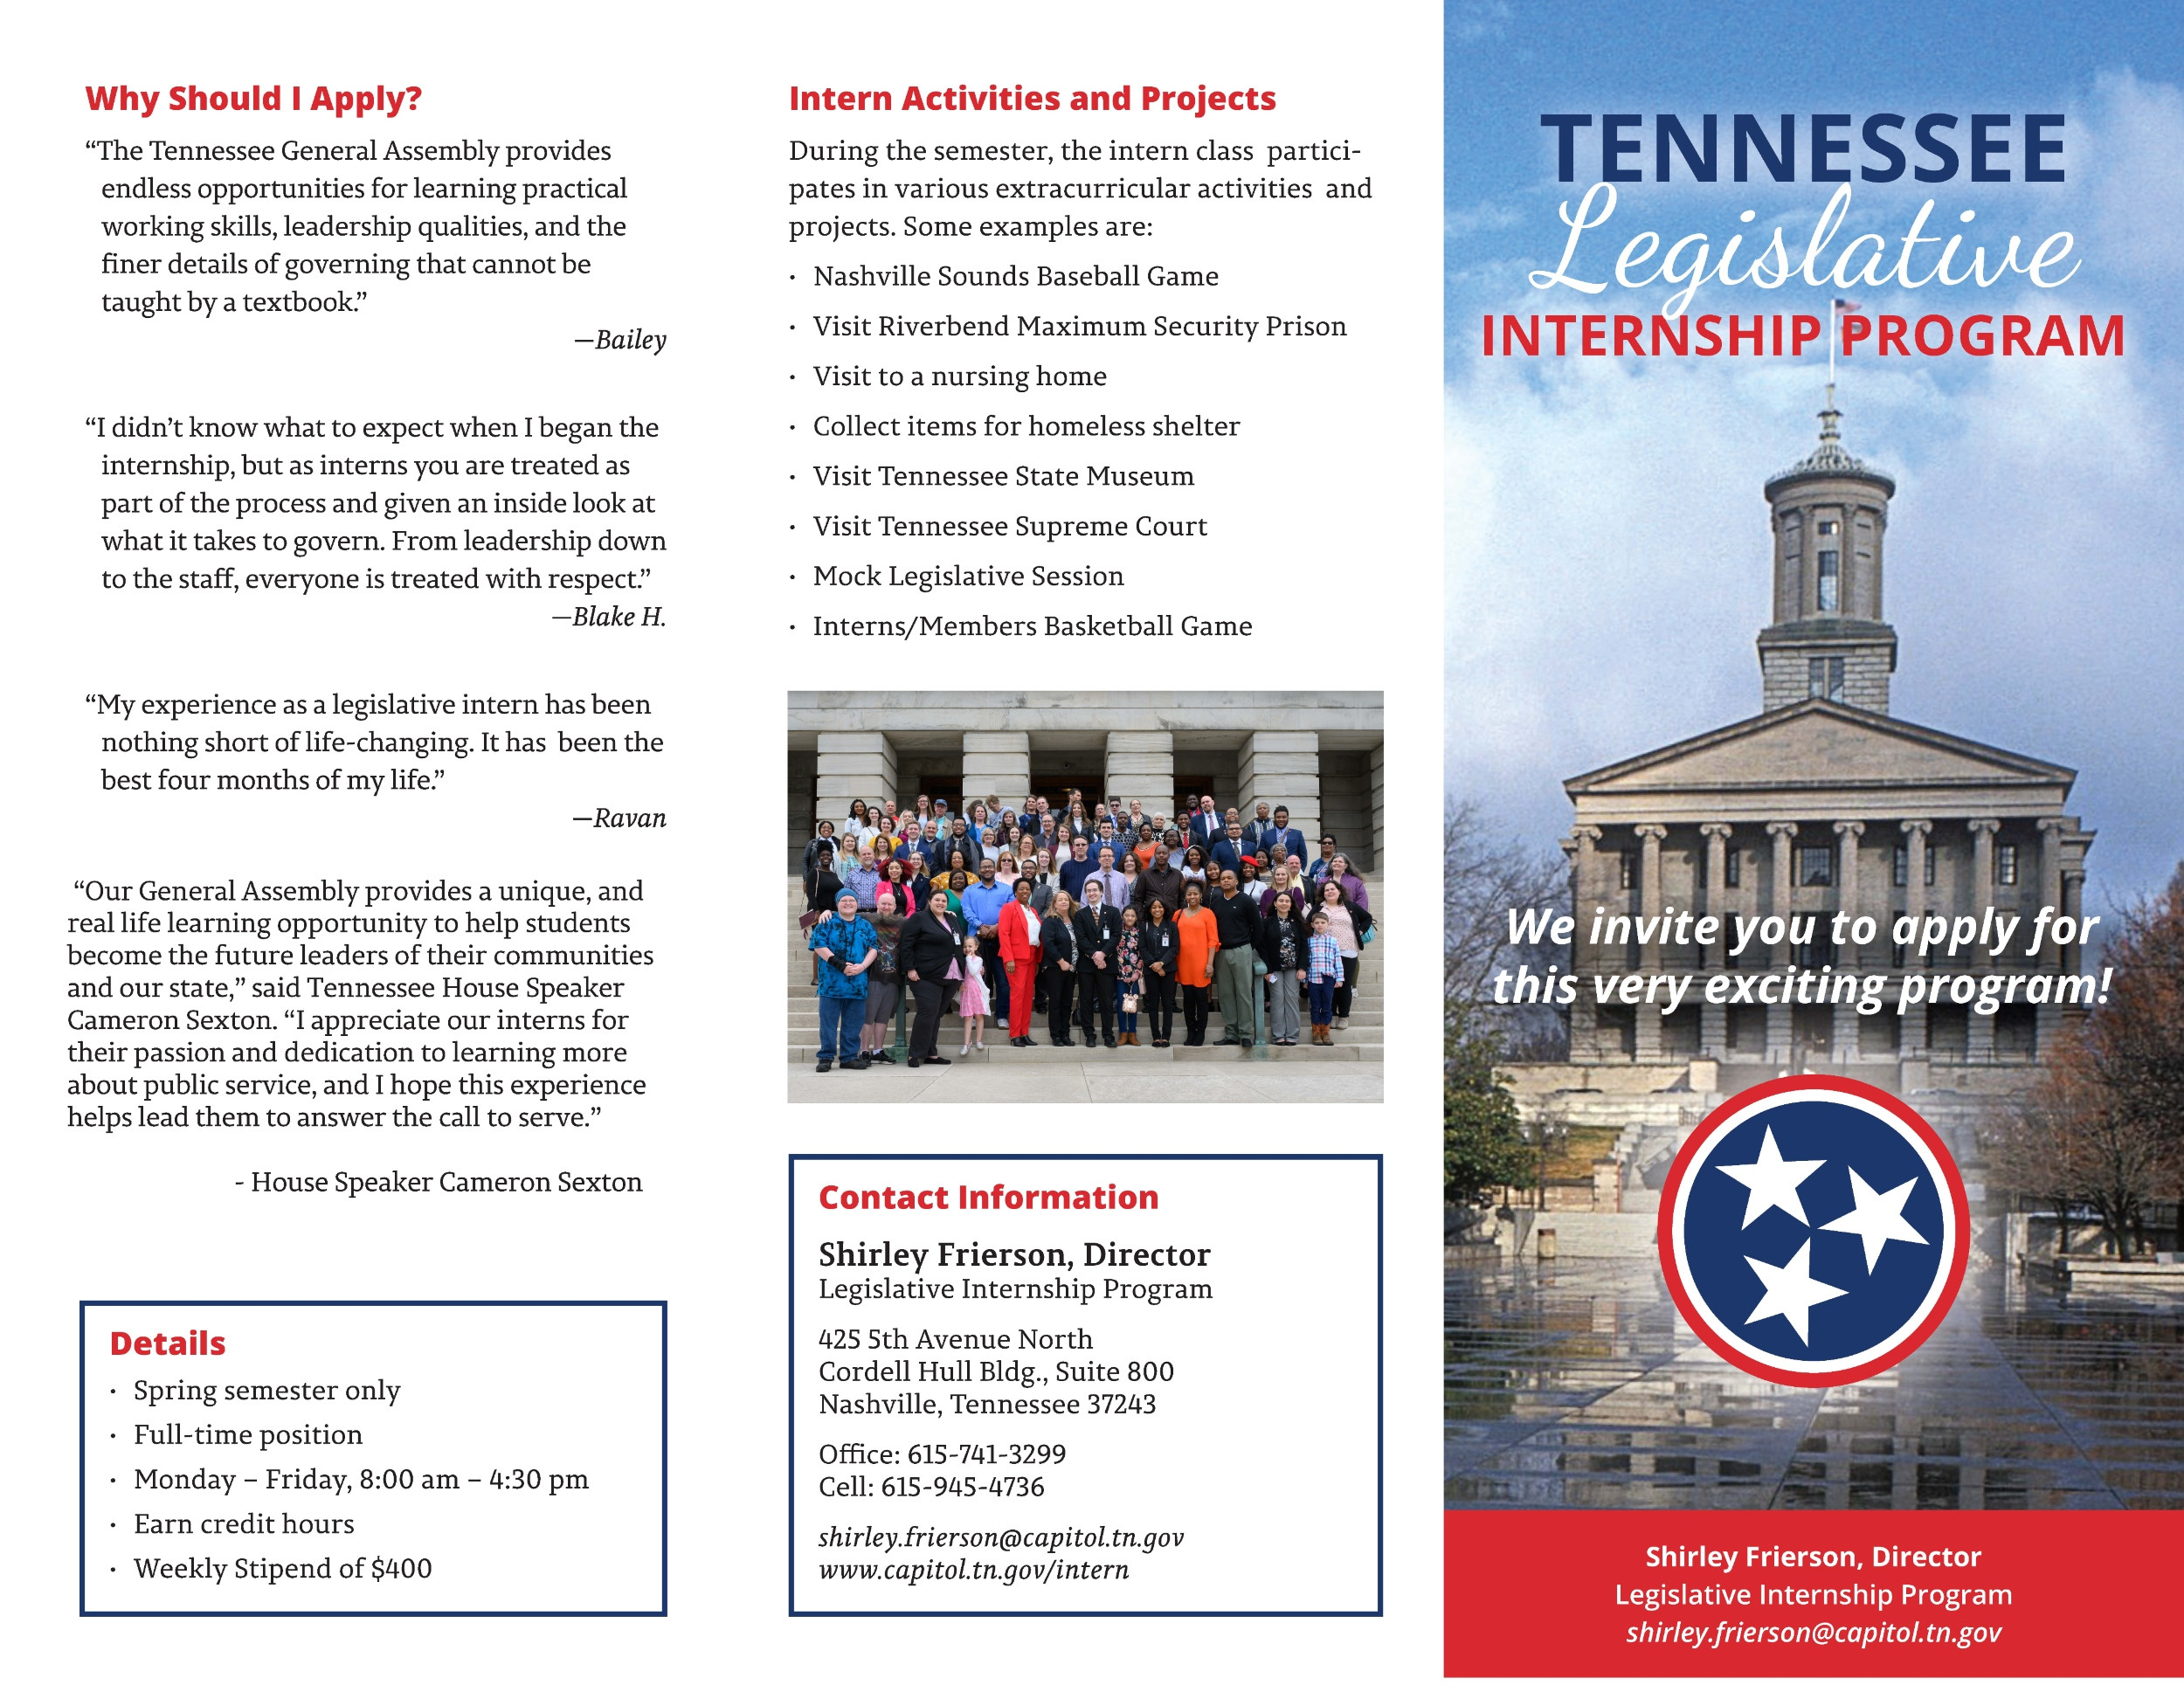 Tennessee Legislative Internship Program | The University of the South ...